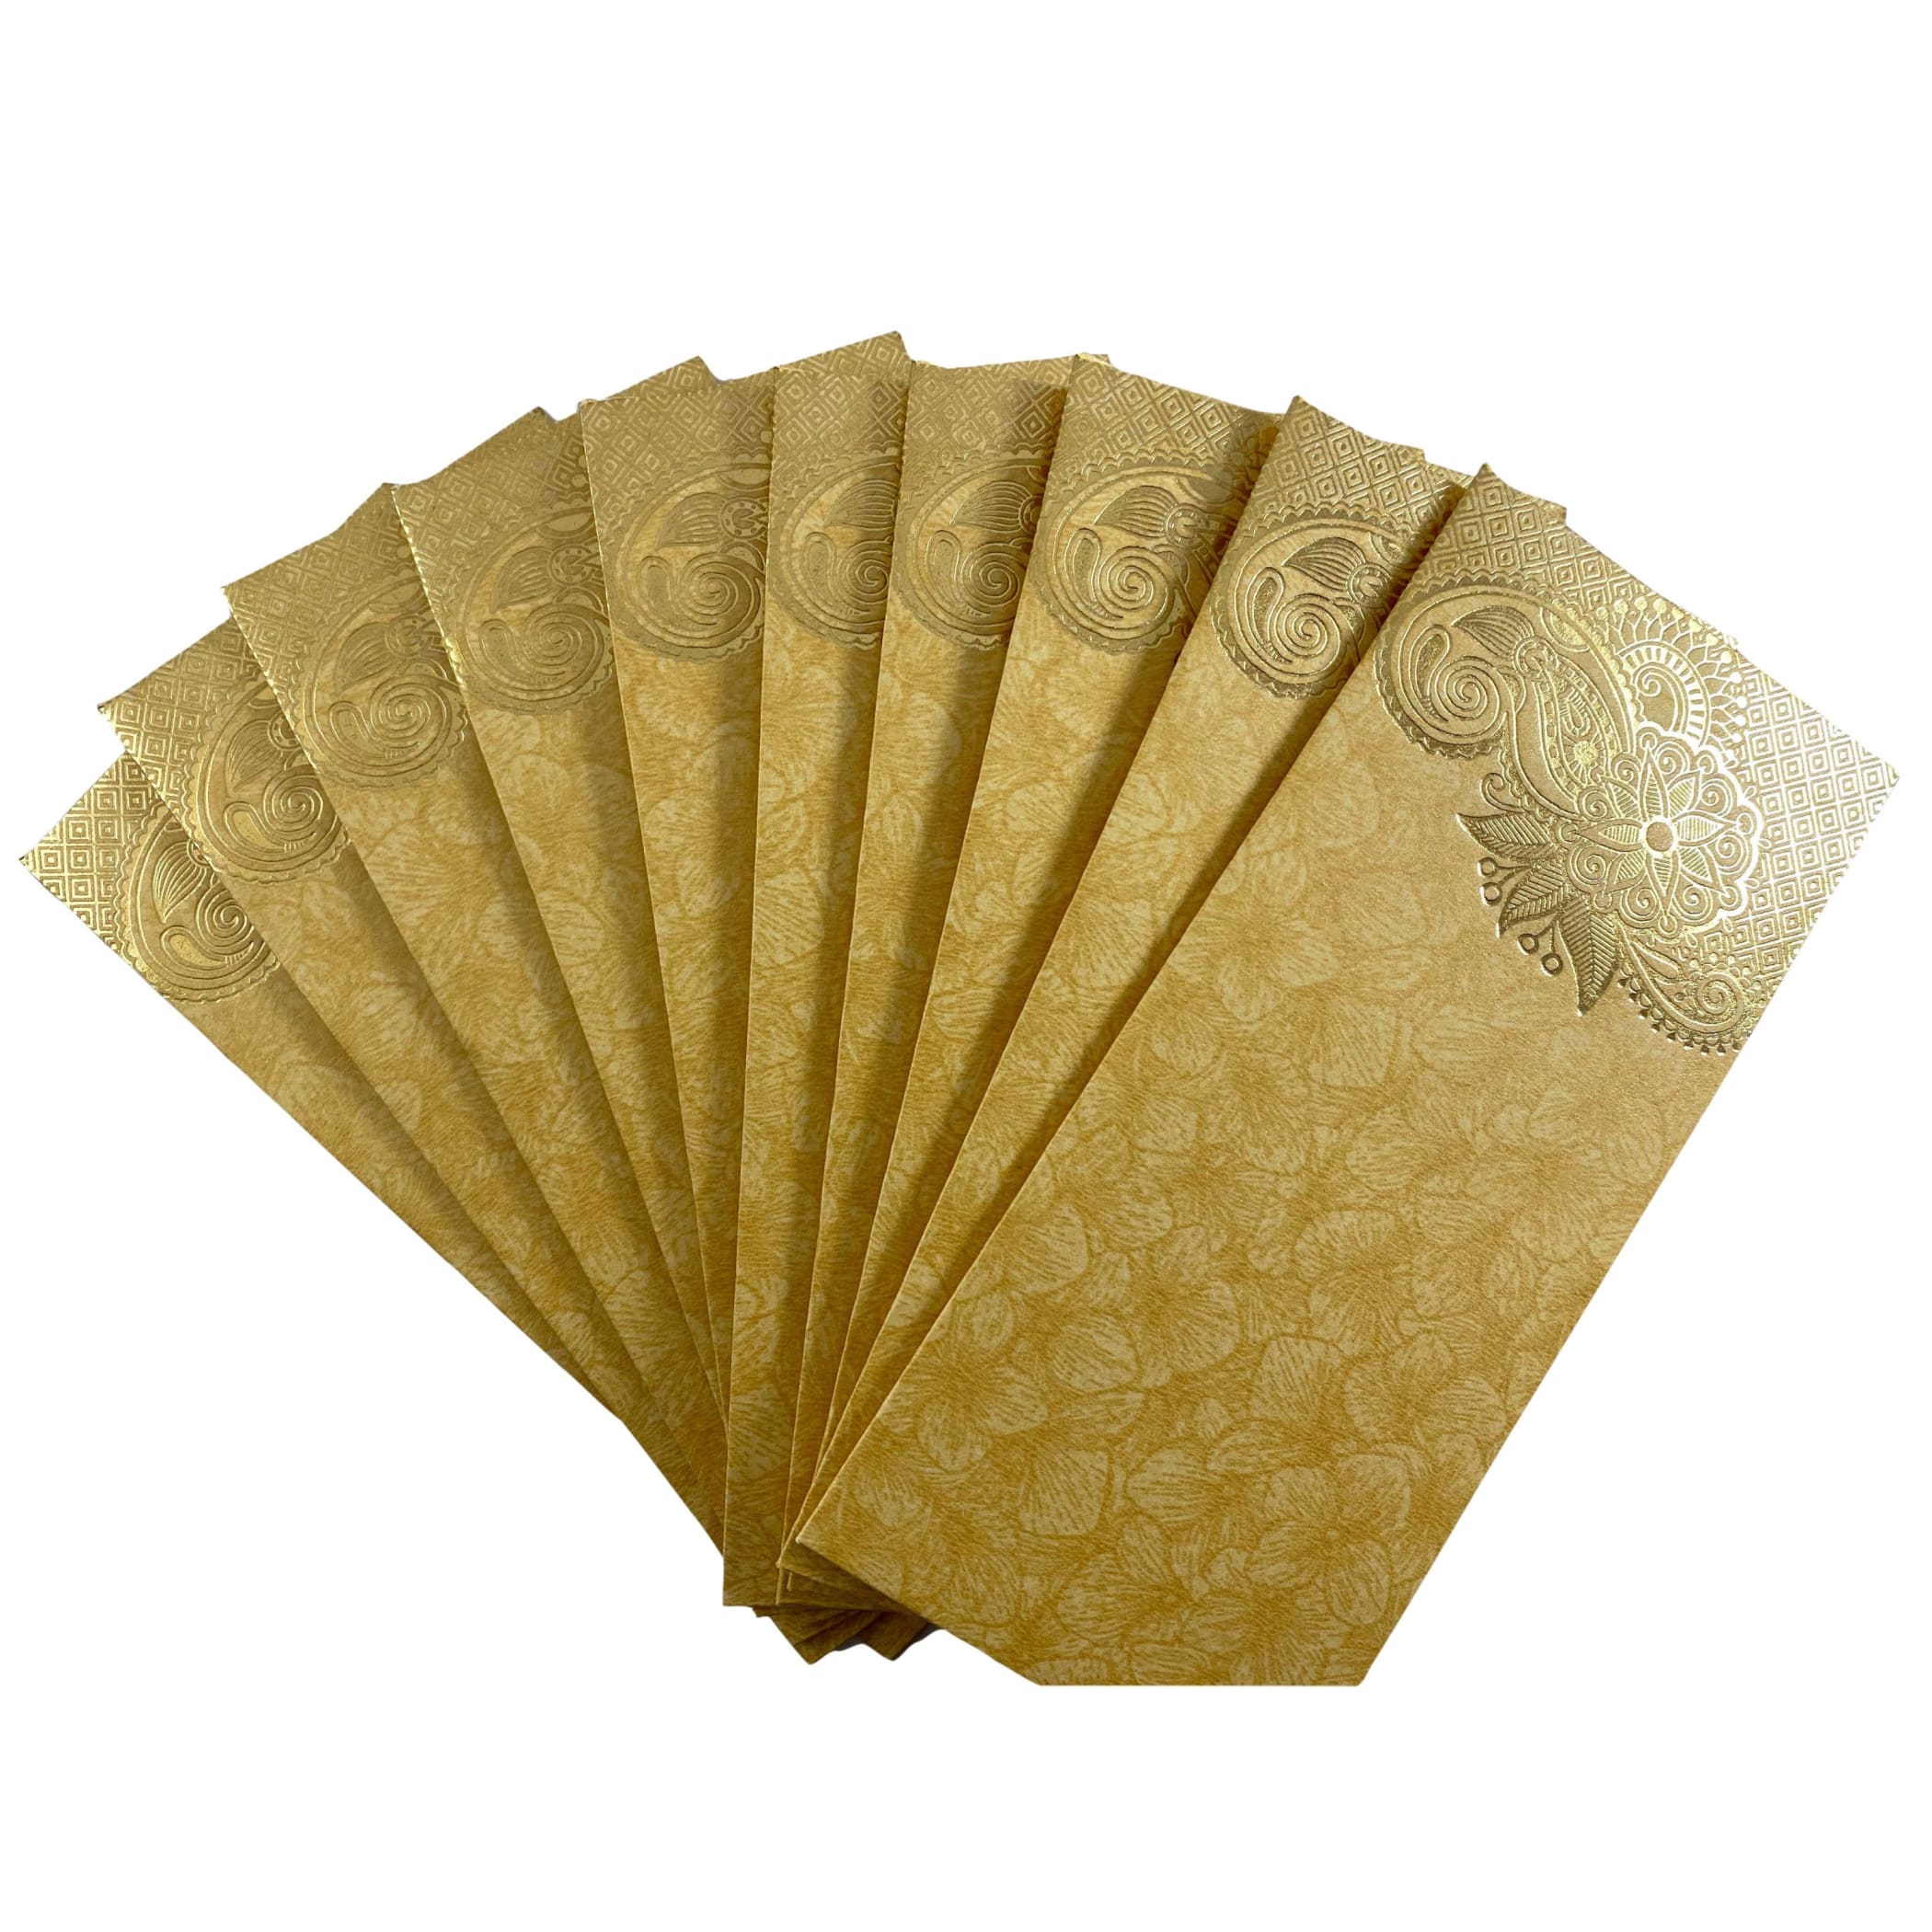 Pack of 10 assorted paisley paper shagun money envelopes